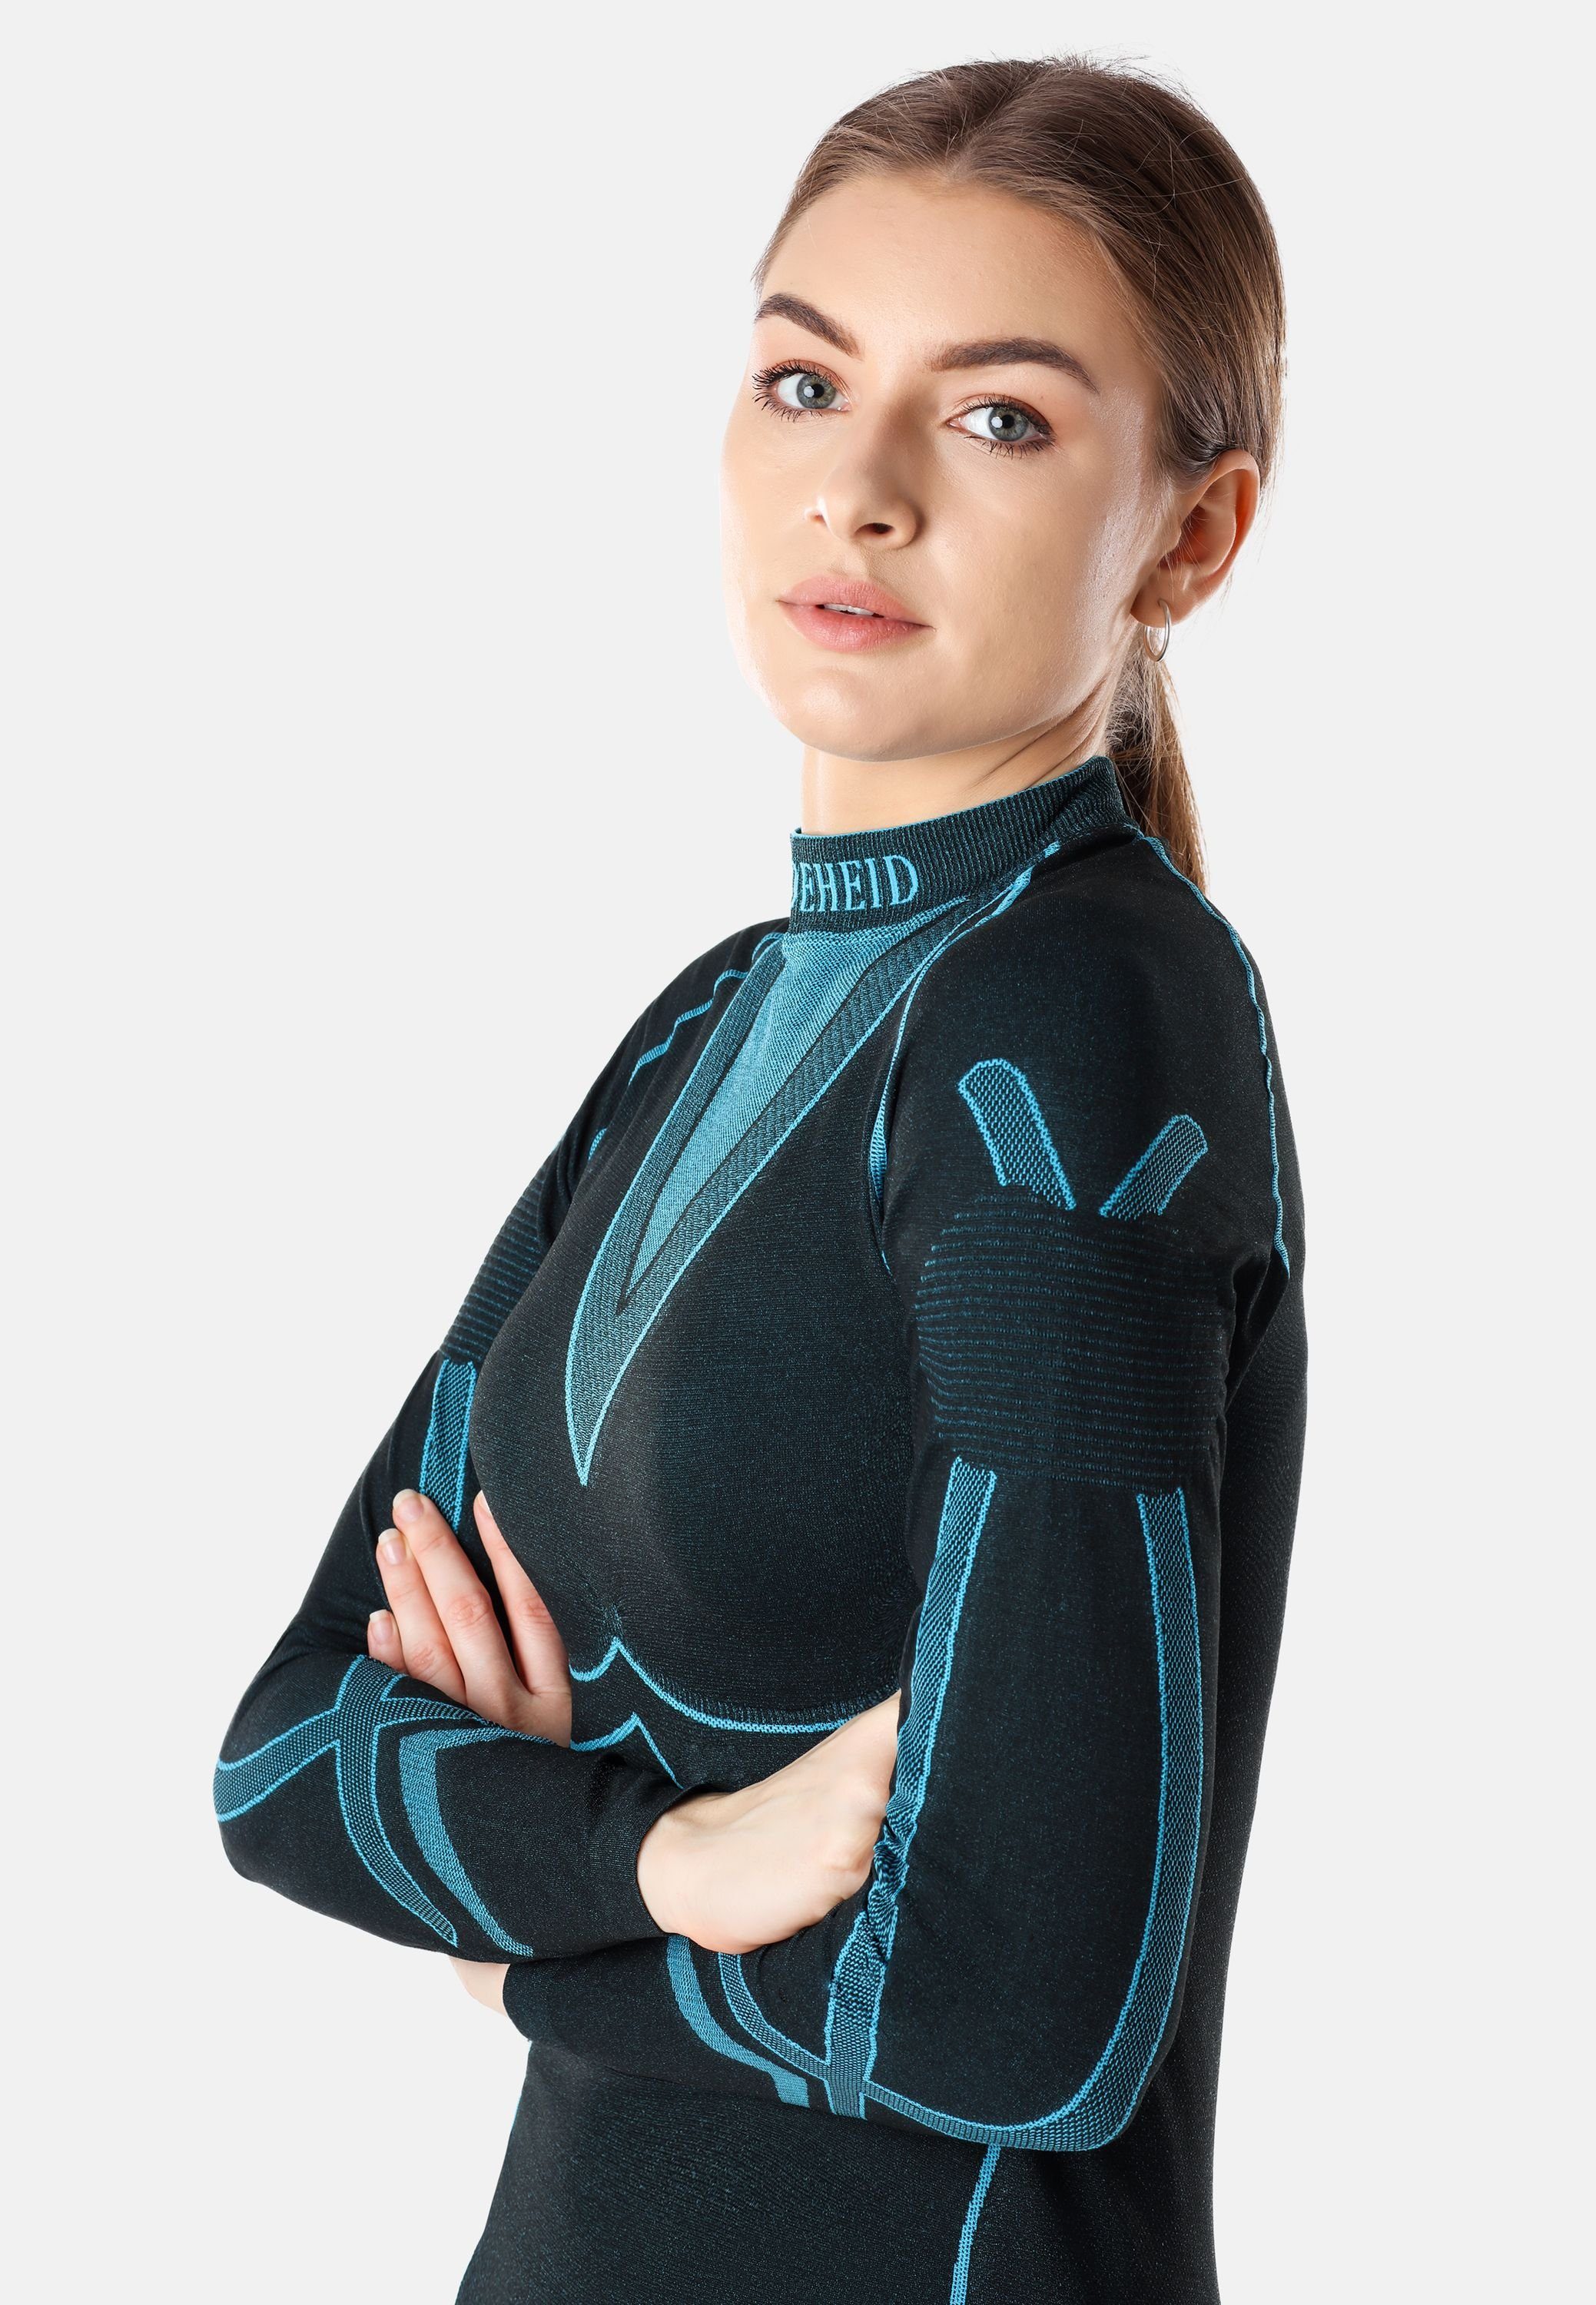 LAGI006 Schwarz/Turquoise Damen Shirt Unterhose Thermoaktiv mit Set Ladeheid (Set, Funktionsunterhose) Funktionsunterhemd Funktionsunterwäsche